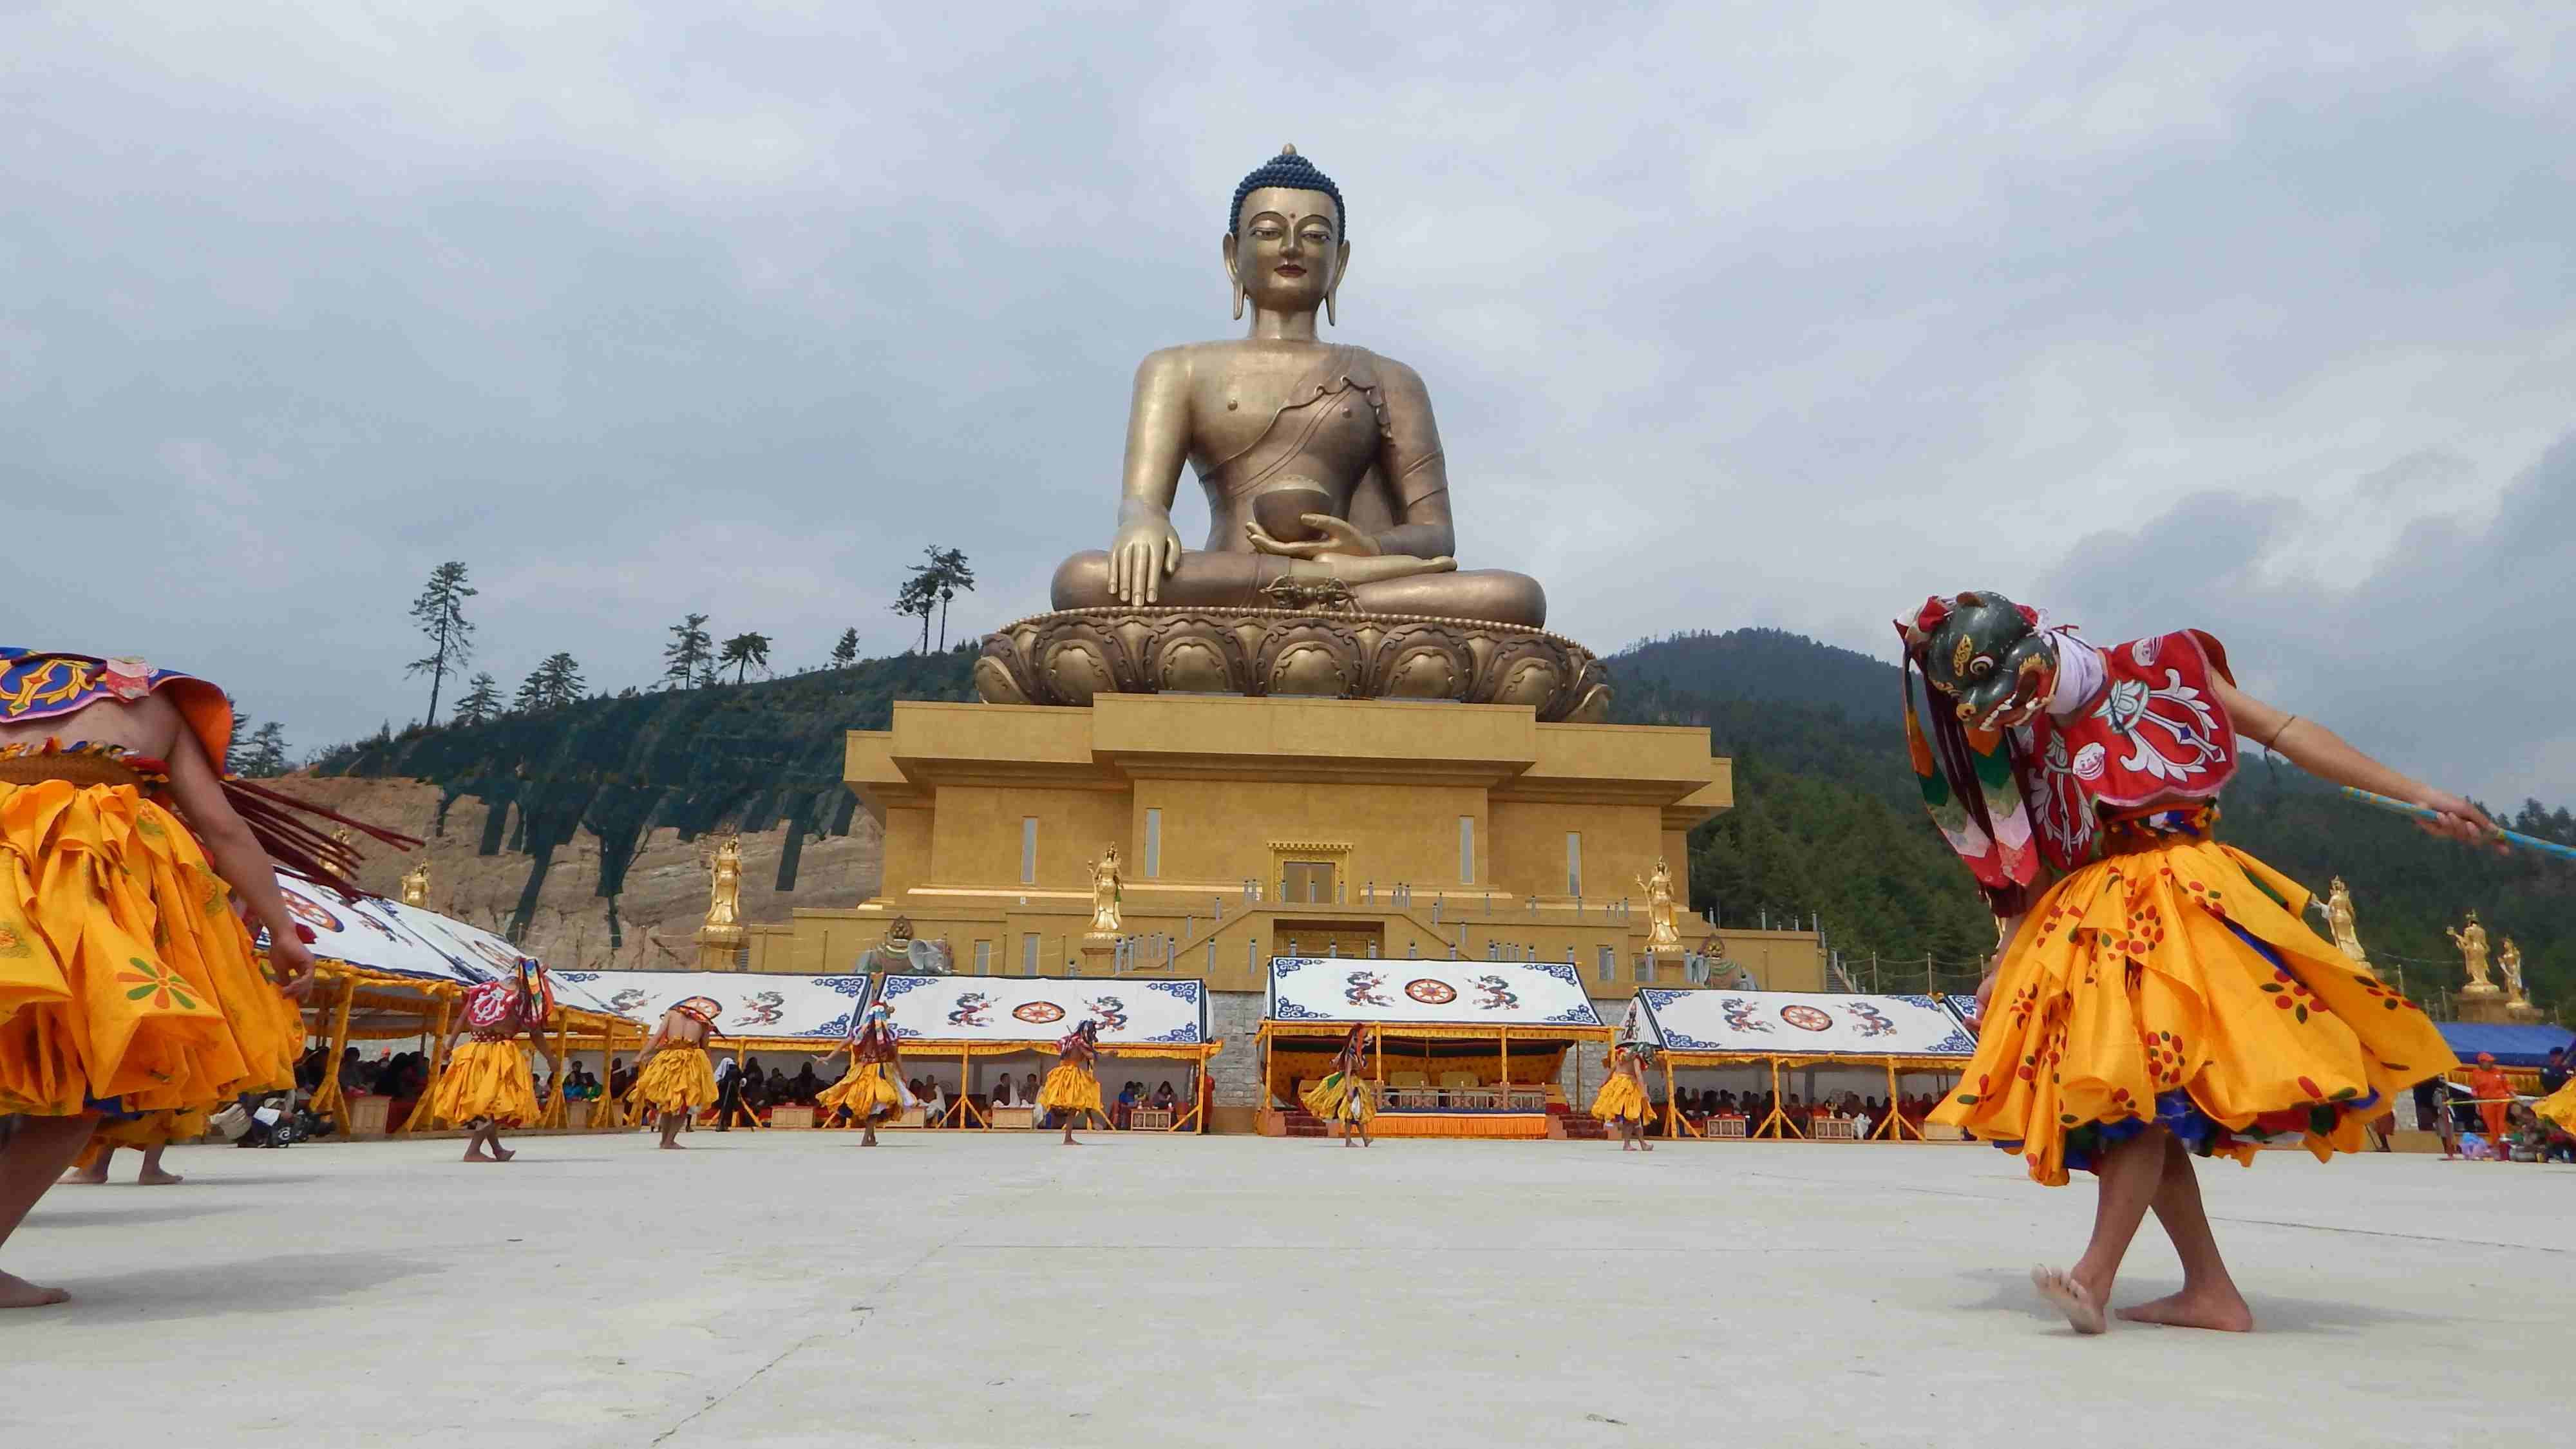 A Profound Look into Bhutan's Buddhist Culture